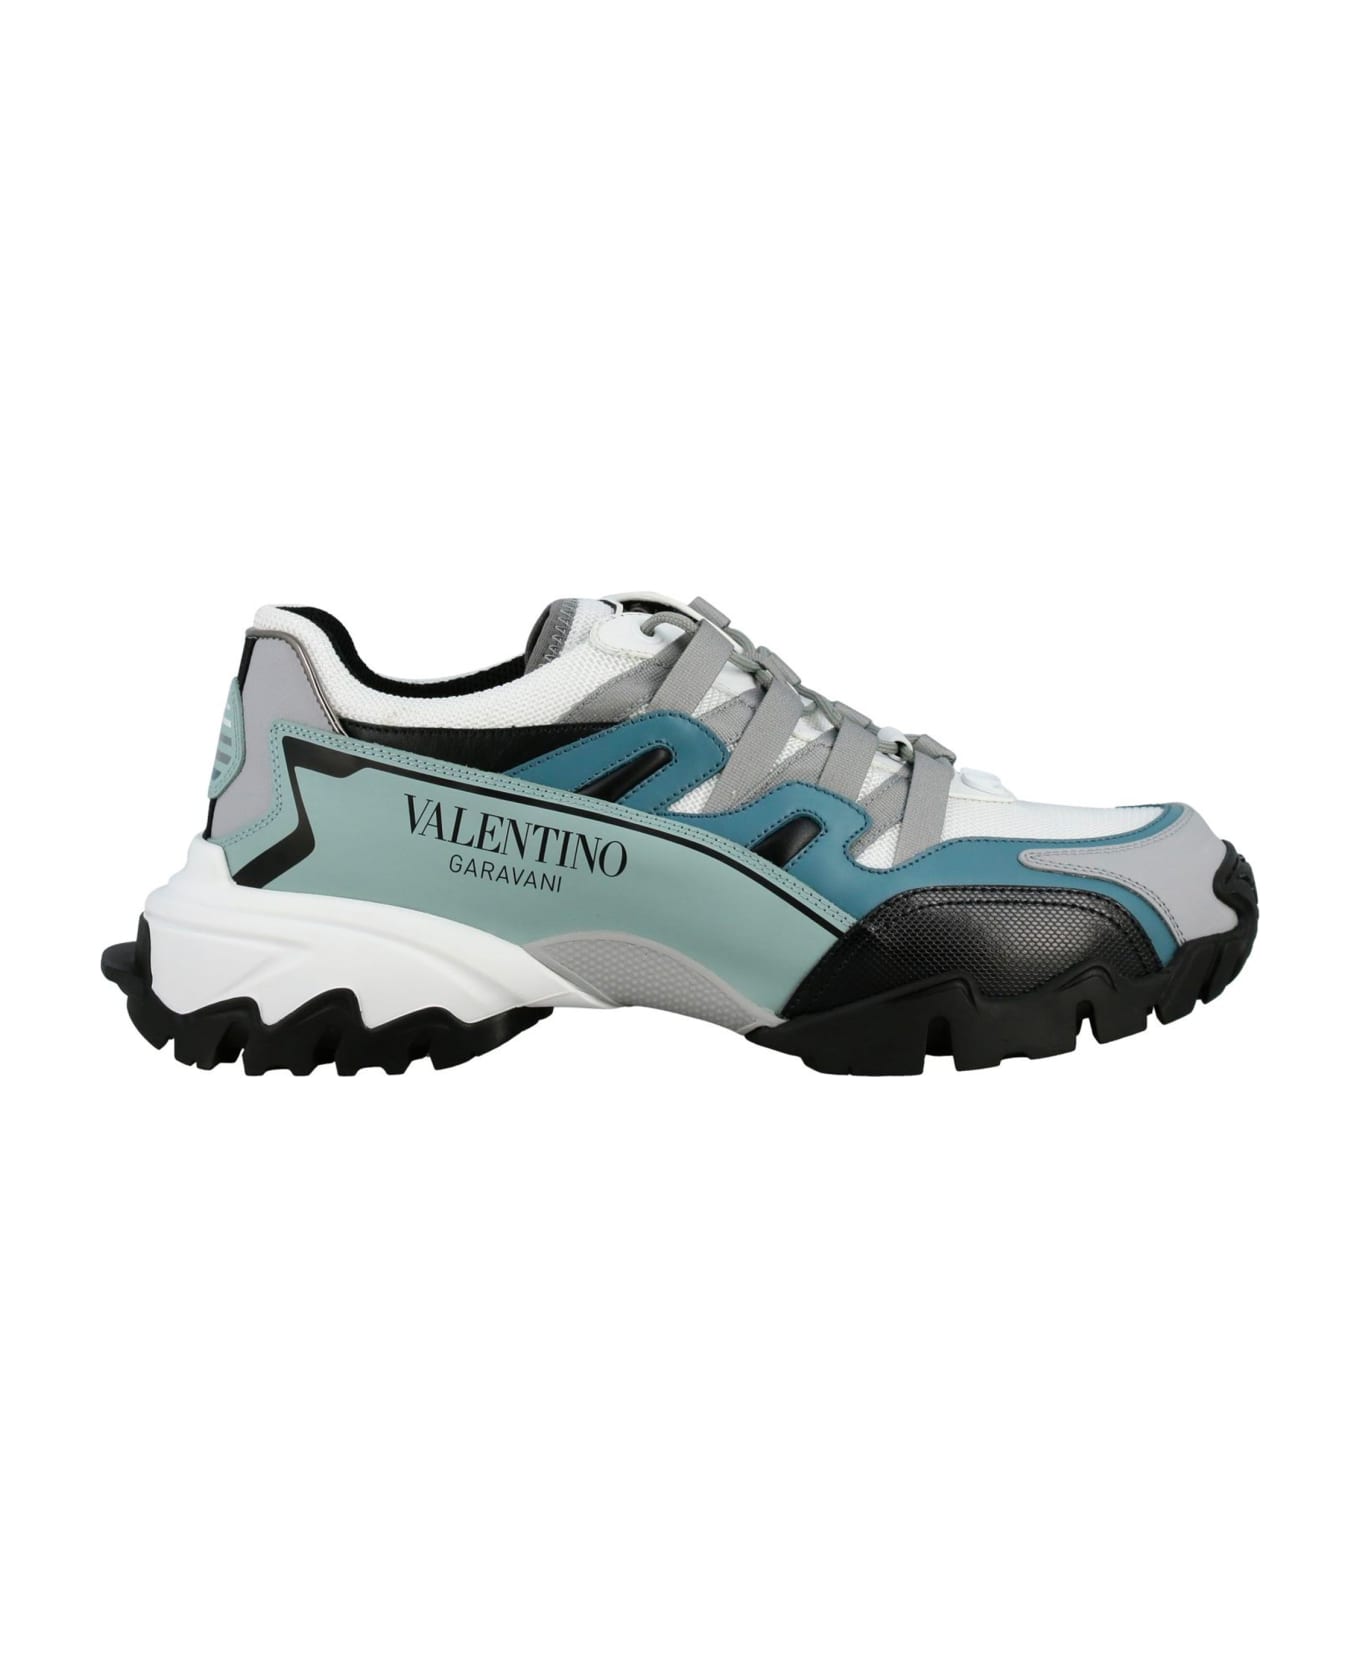 Valentino Garavani Logo Climbers Sneakers - Gray